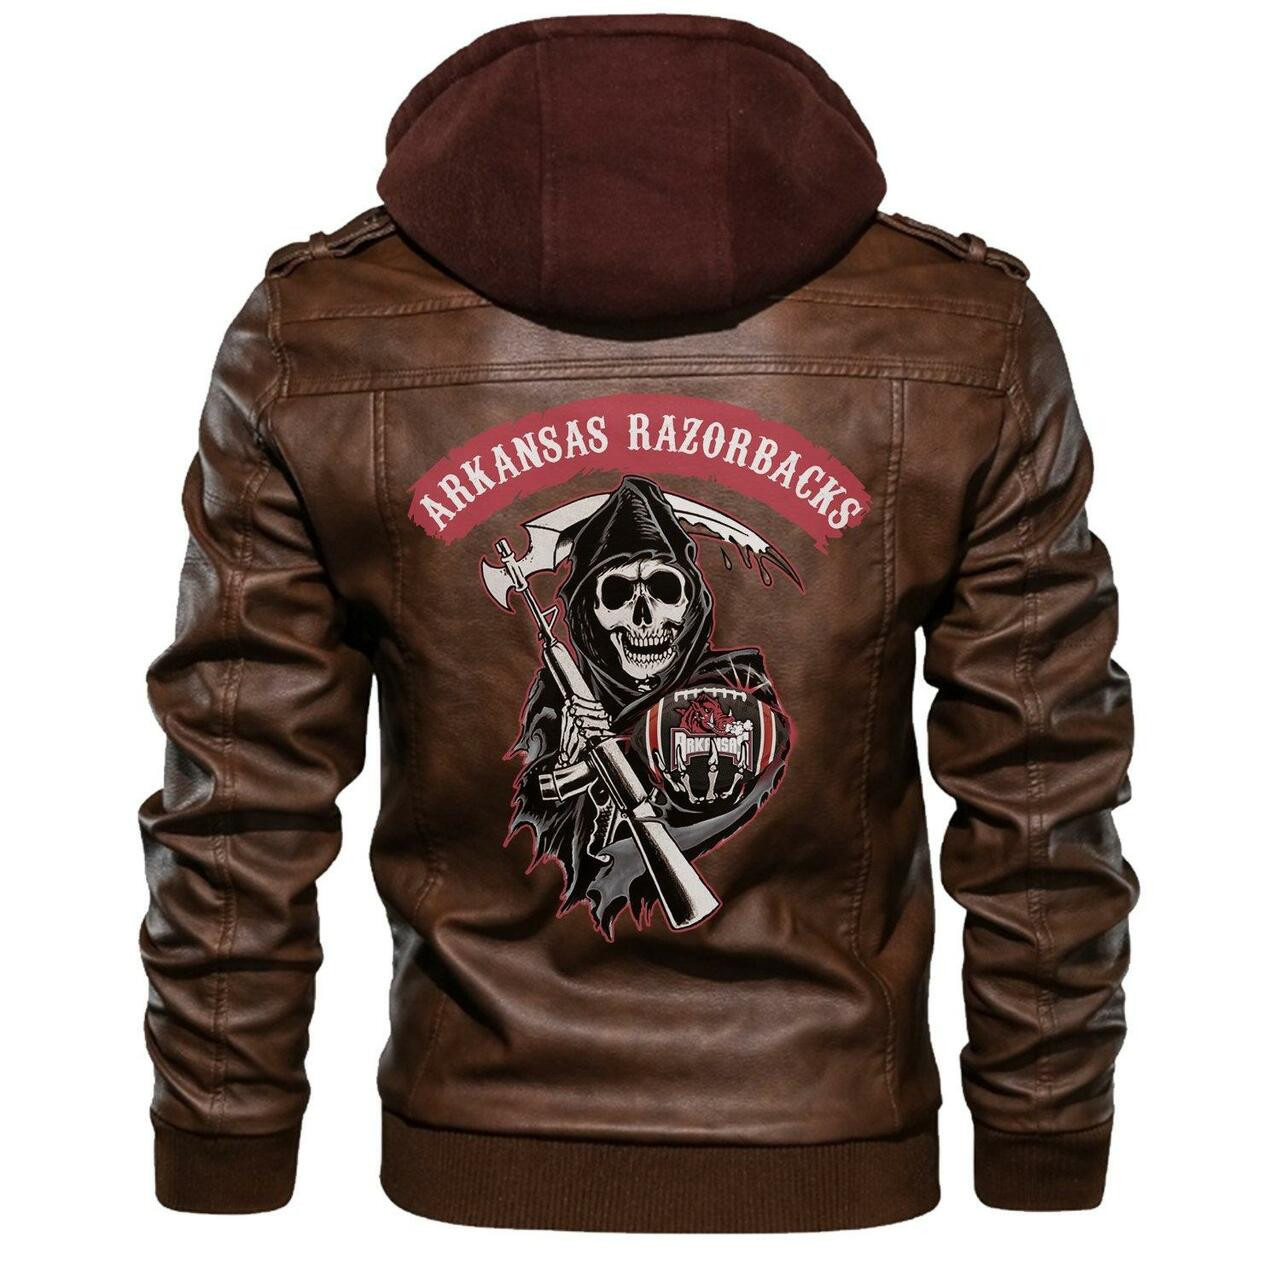 Top leather jacket Sells Best on Techcomshop 123